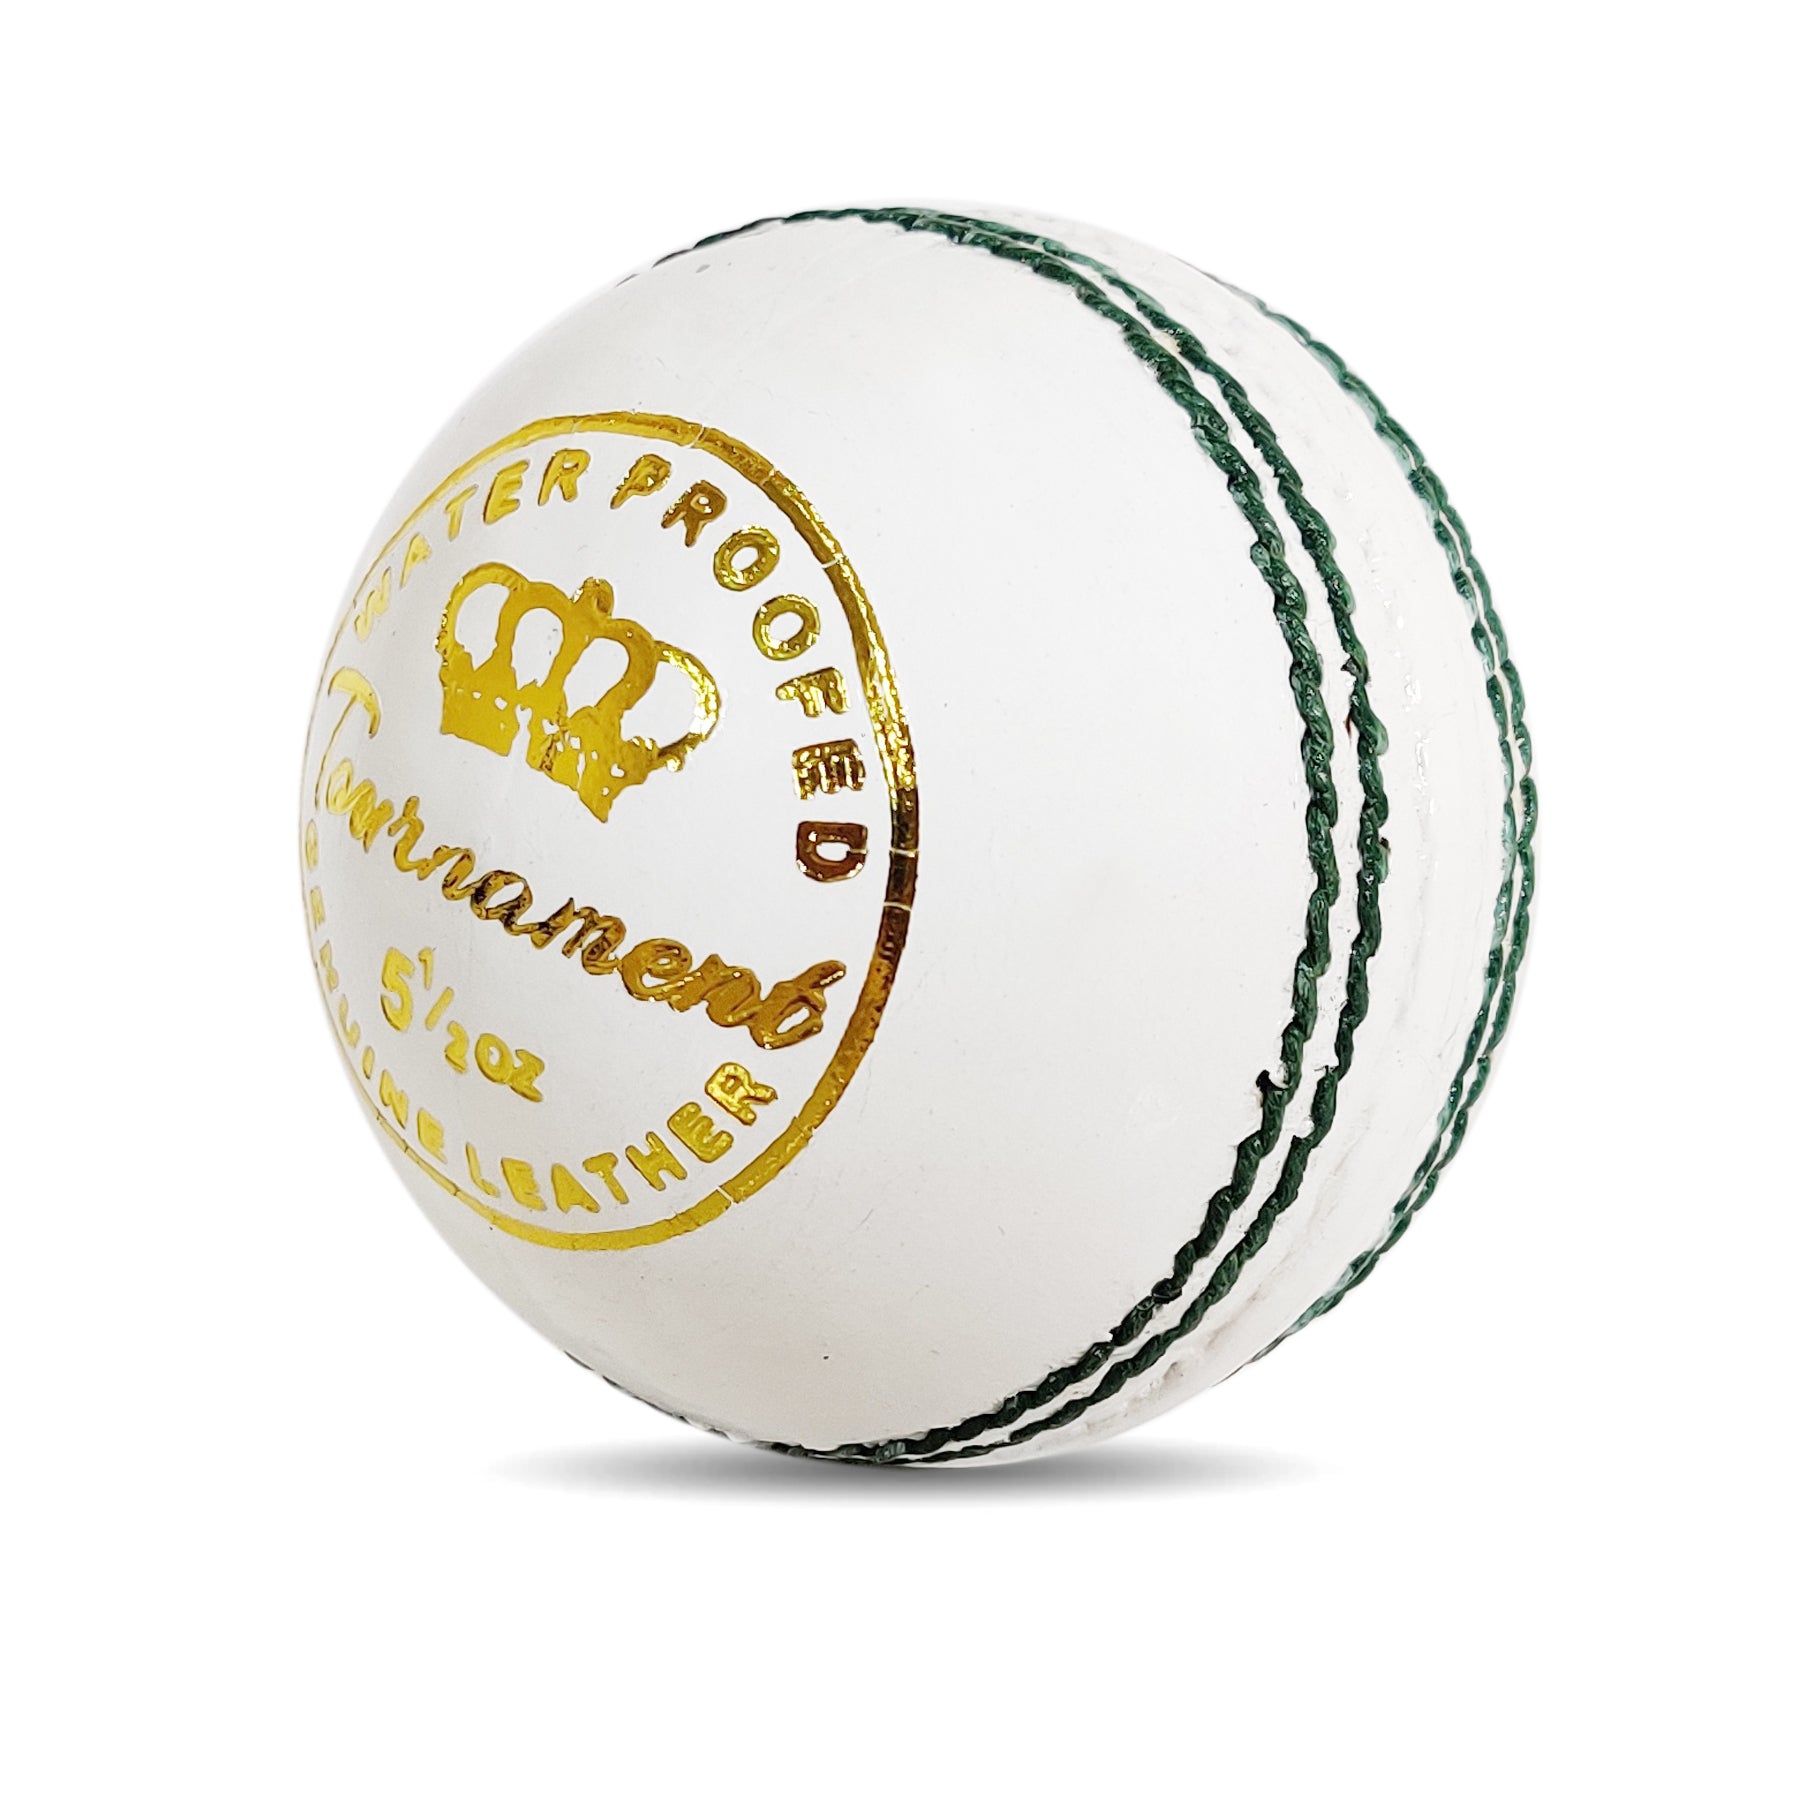 Prokick Tournament Four Piece Leather Cricket Ball, 1Pc (White) - Best Price online Prokicksports.com